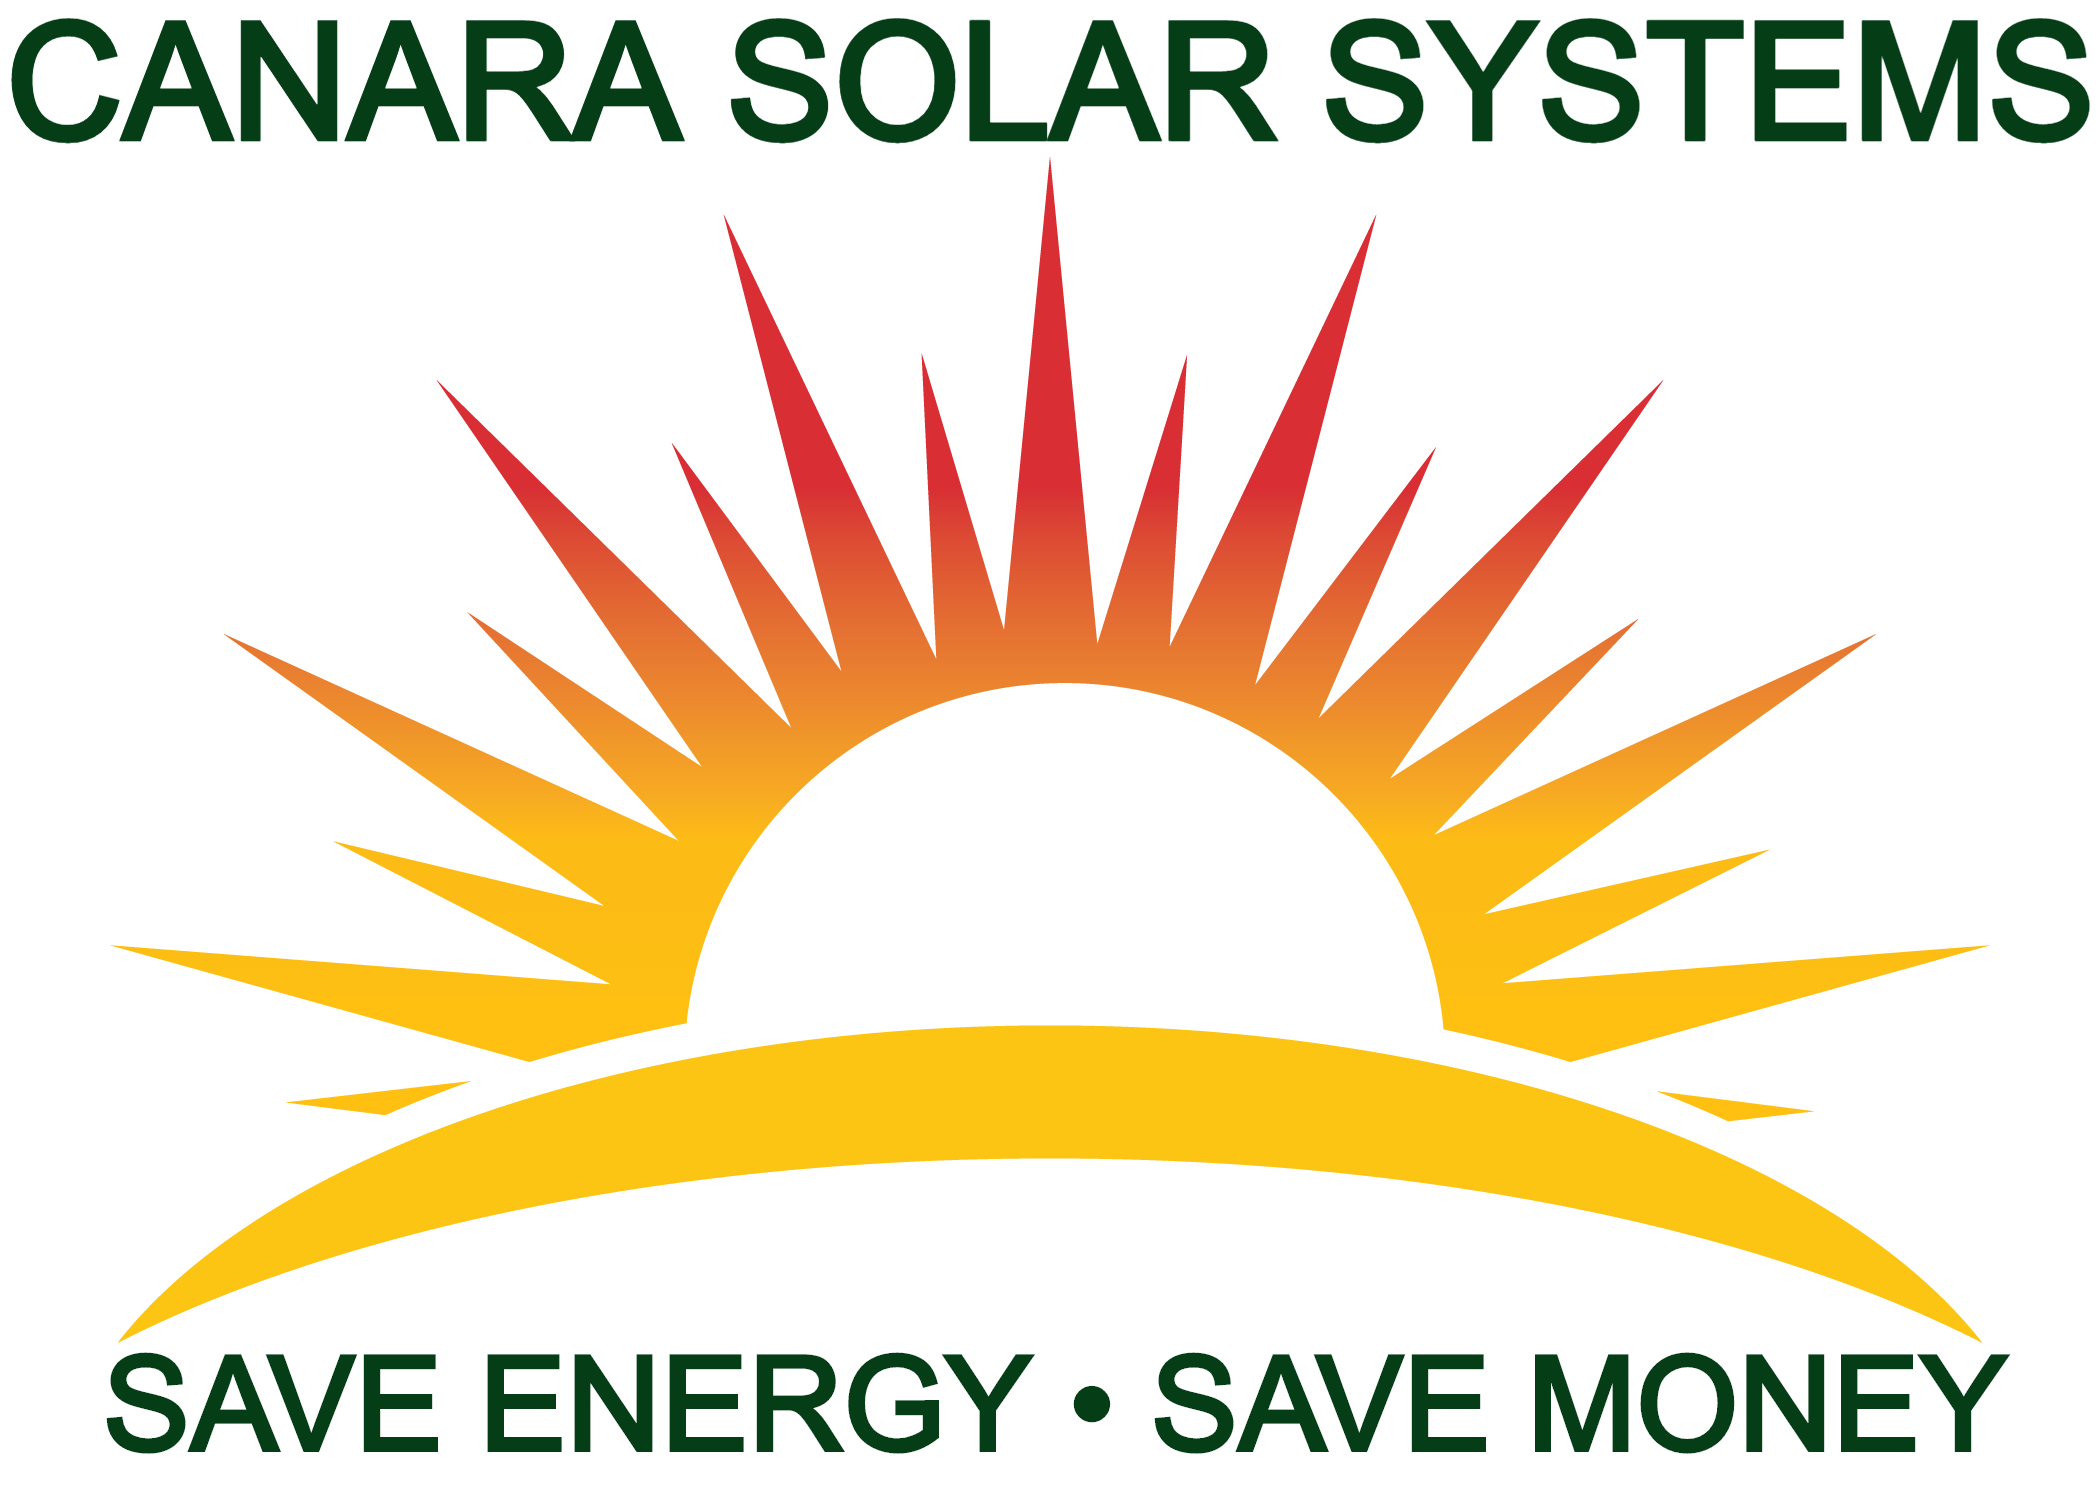 tata power solar logo